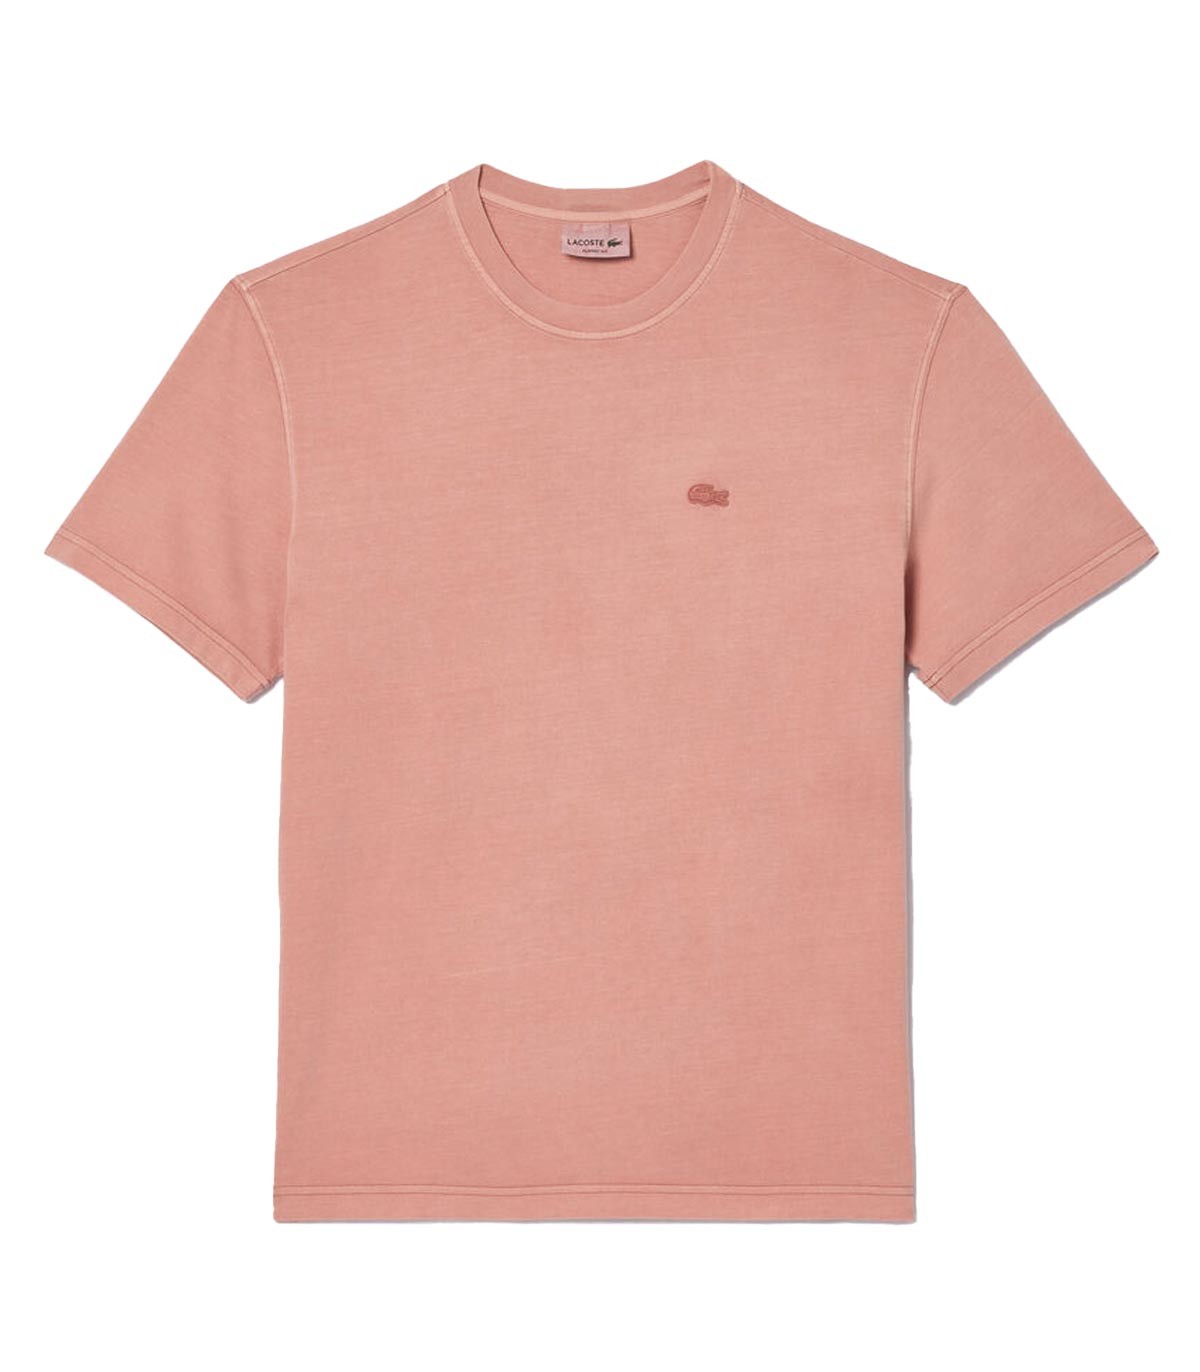 Lacoste - Camiseta Natural Dyed - Rosa